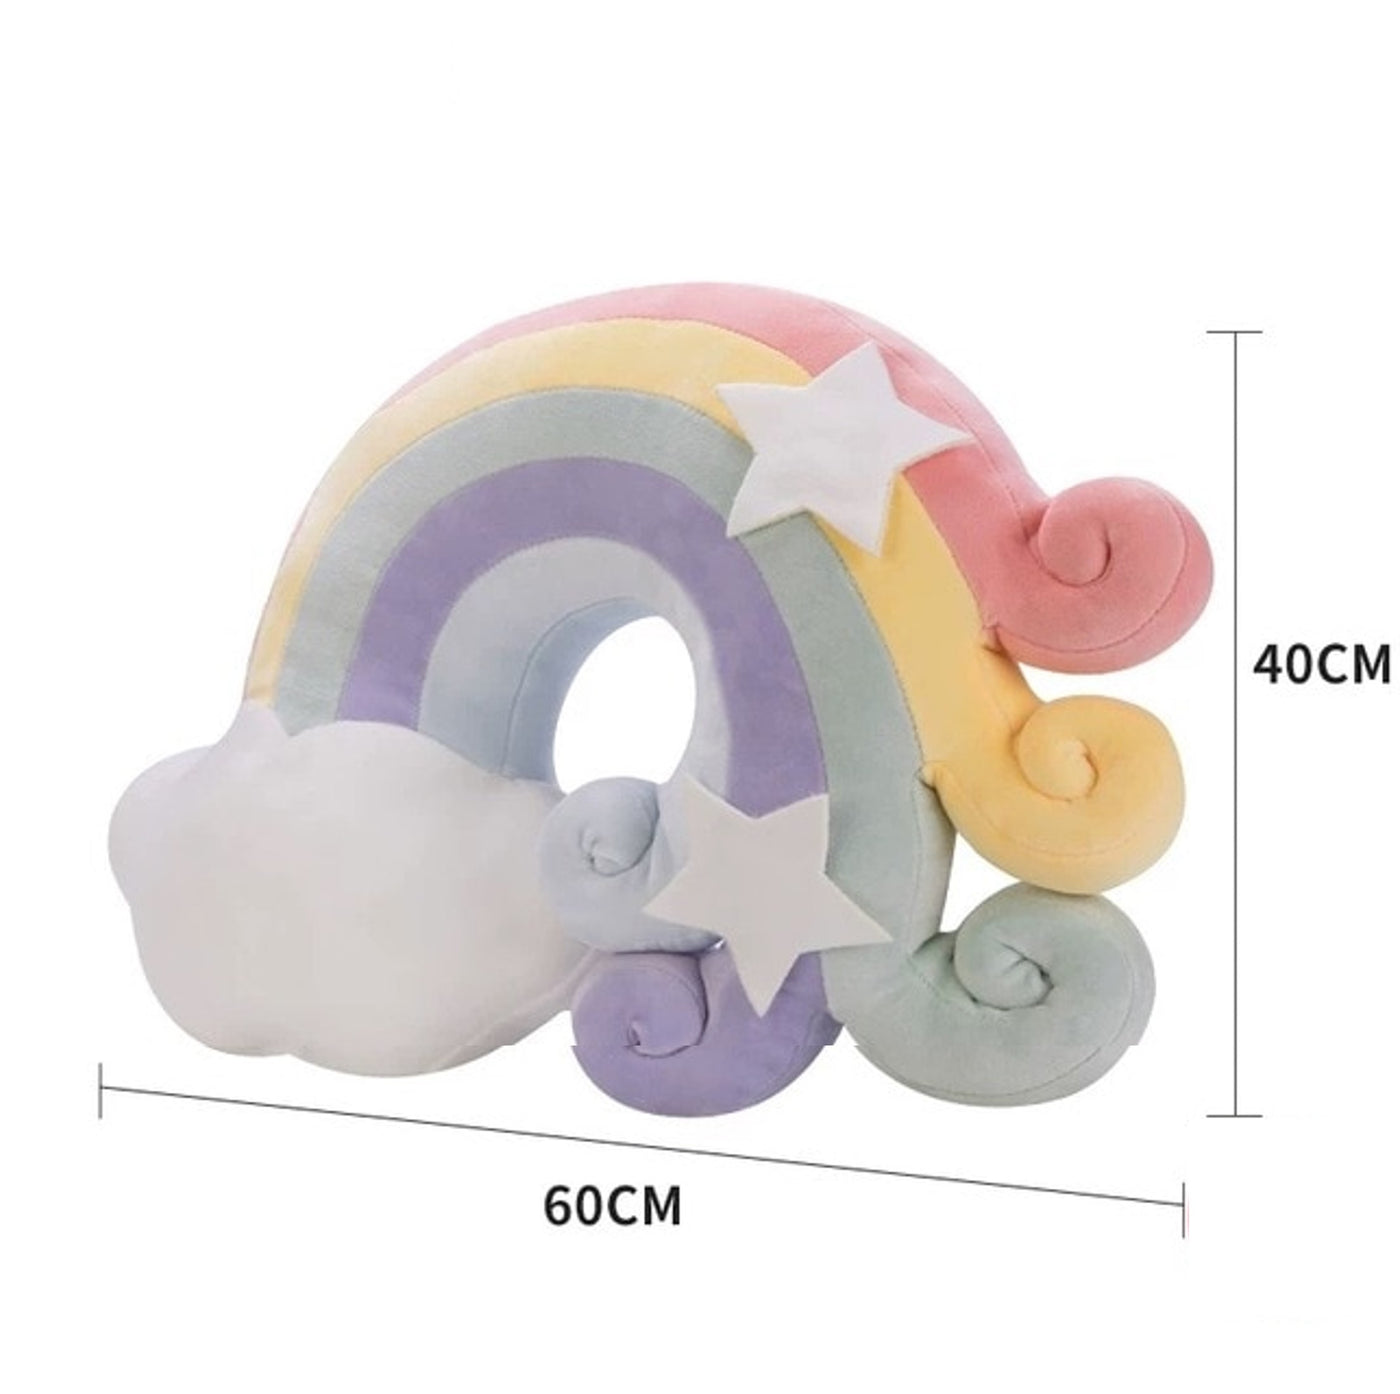 Candy Rainbow Pillow Cushion - Hamod Baby